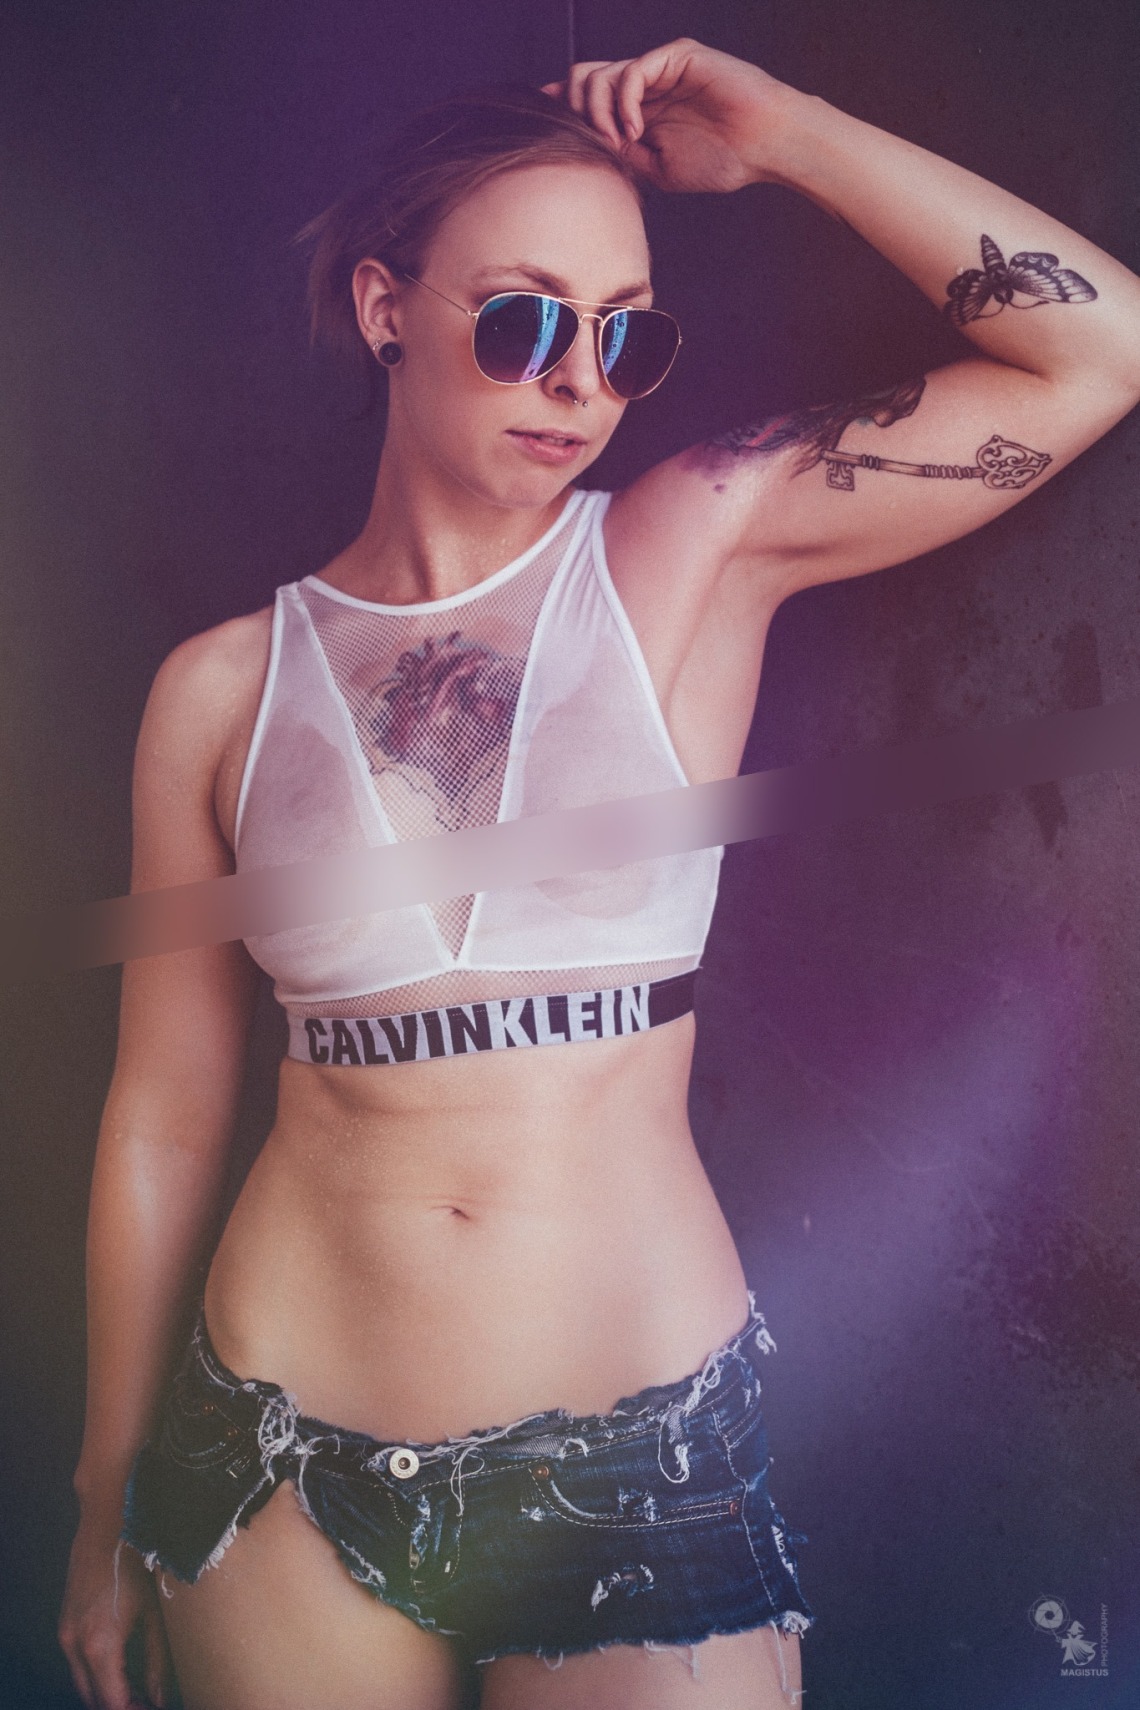 Super sexy tattoo girl showing her boobs wearing a seethrough wetlook top